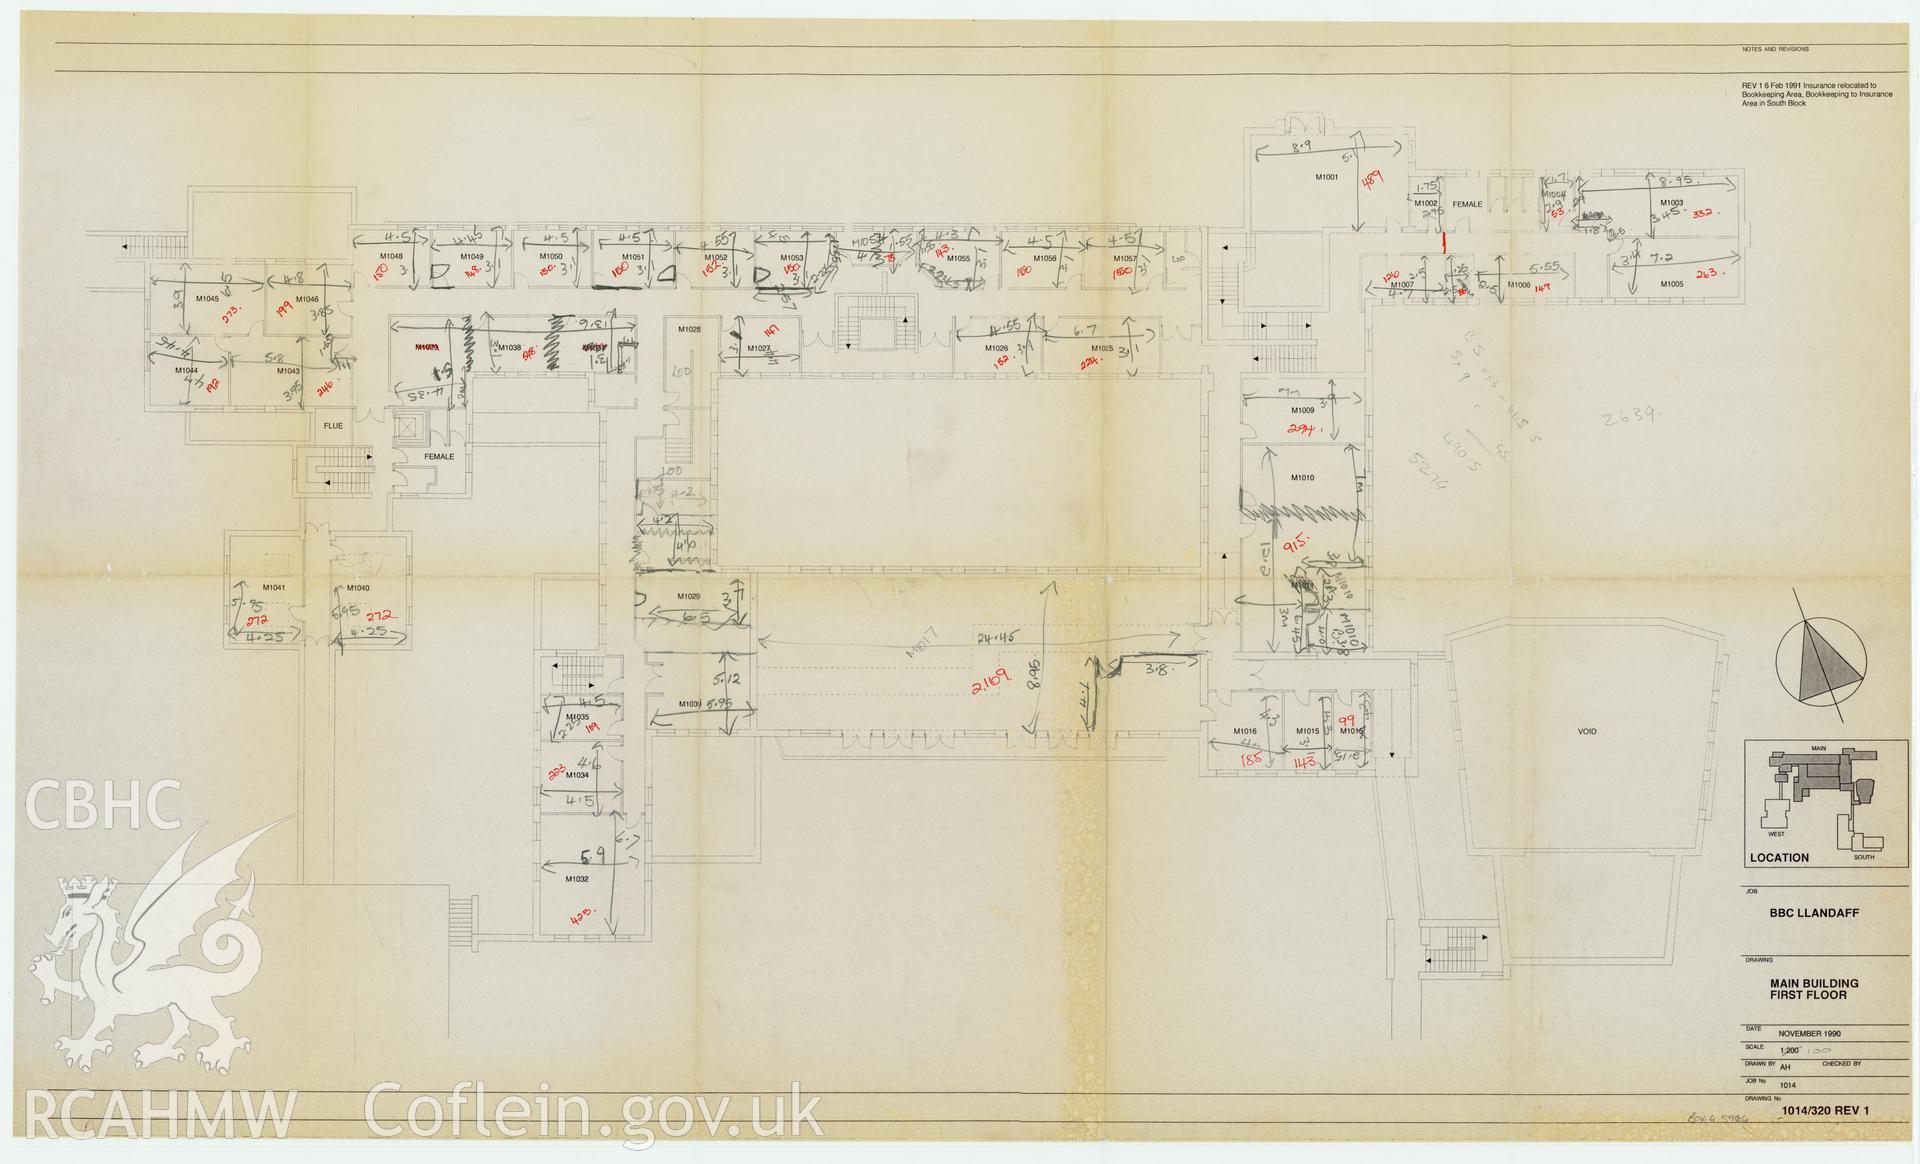 Digitised drawing plan of BBC Llandaff main building - drawing of the first floor plan. Drawing no. 1014/320, Rev.1. November 1990.